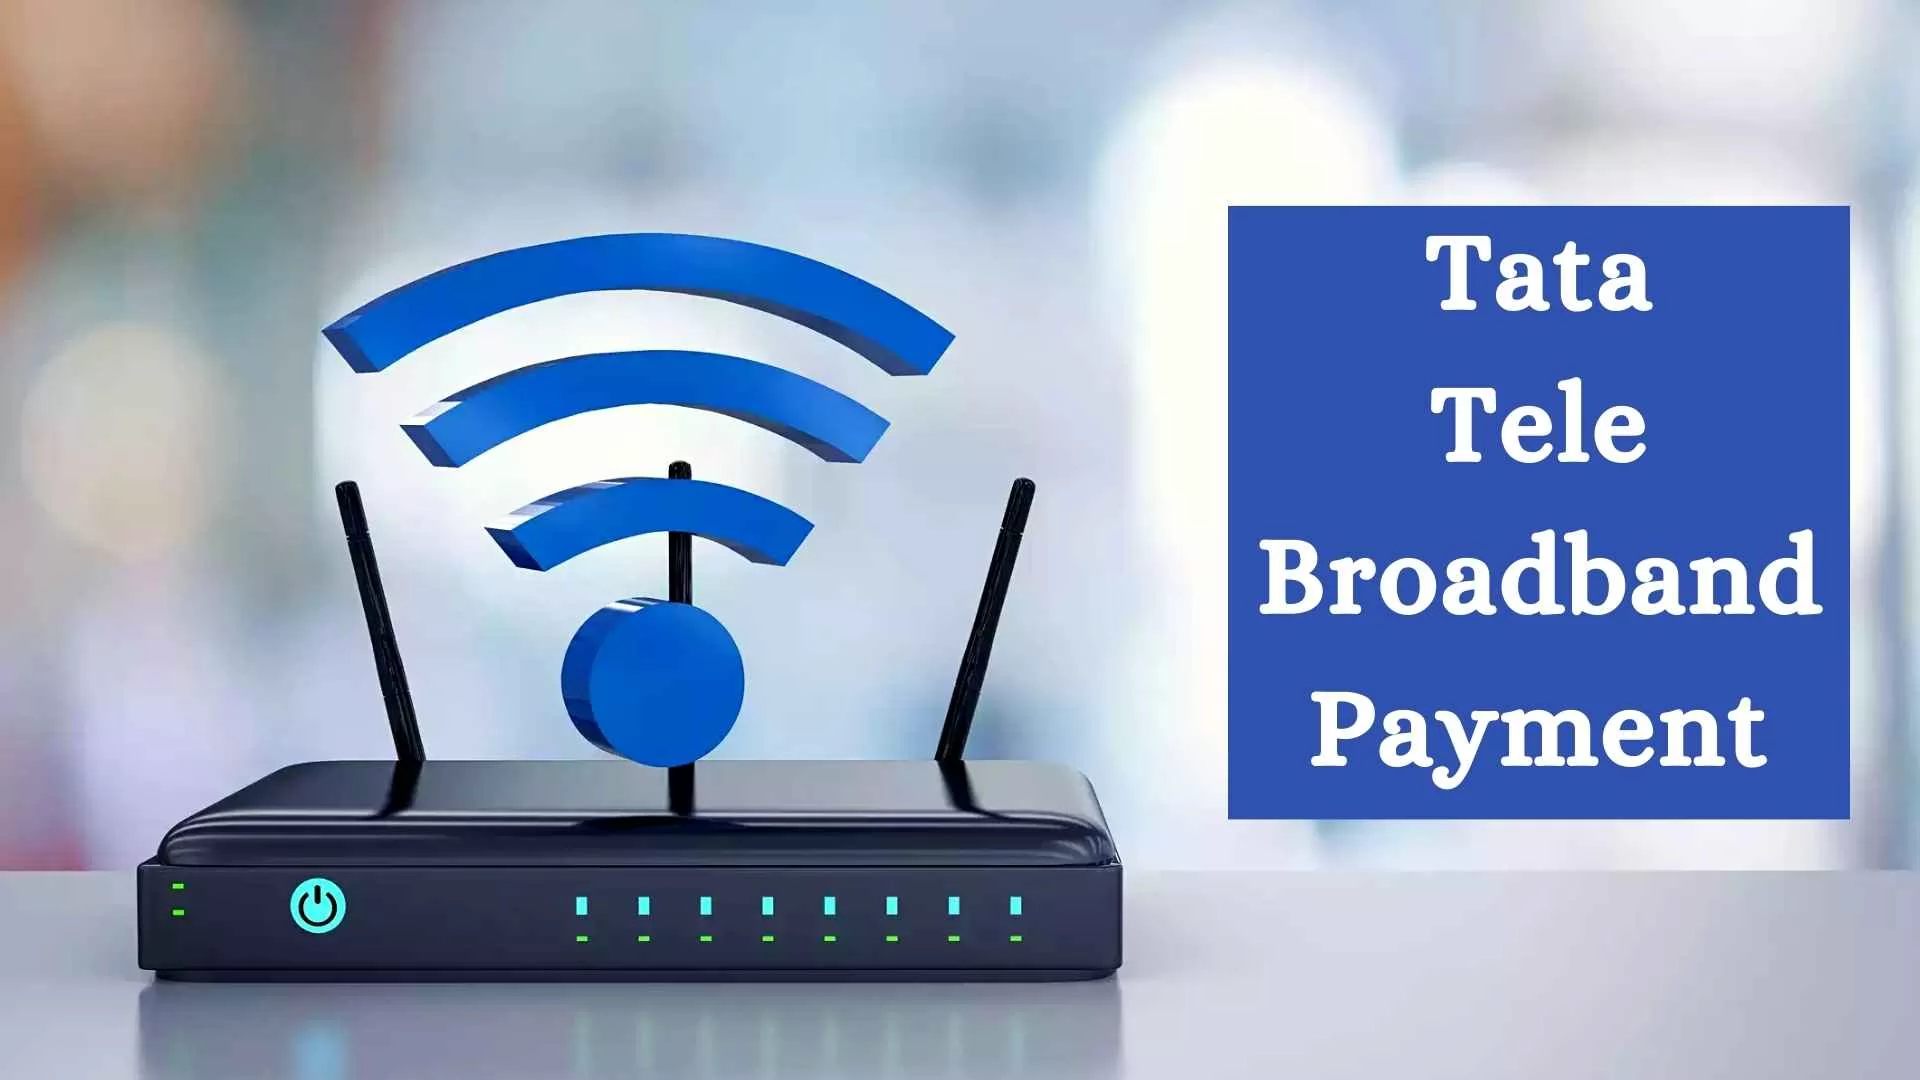 Tata Tele Broadband Payment